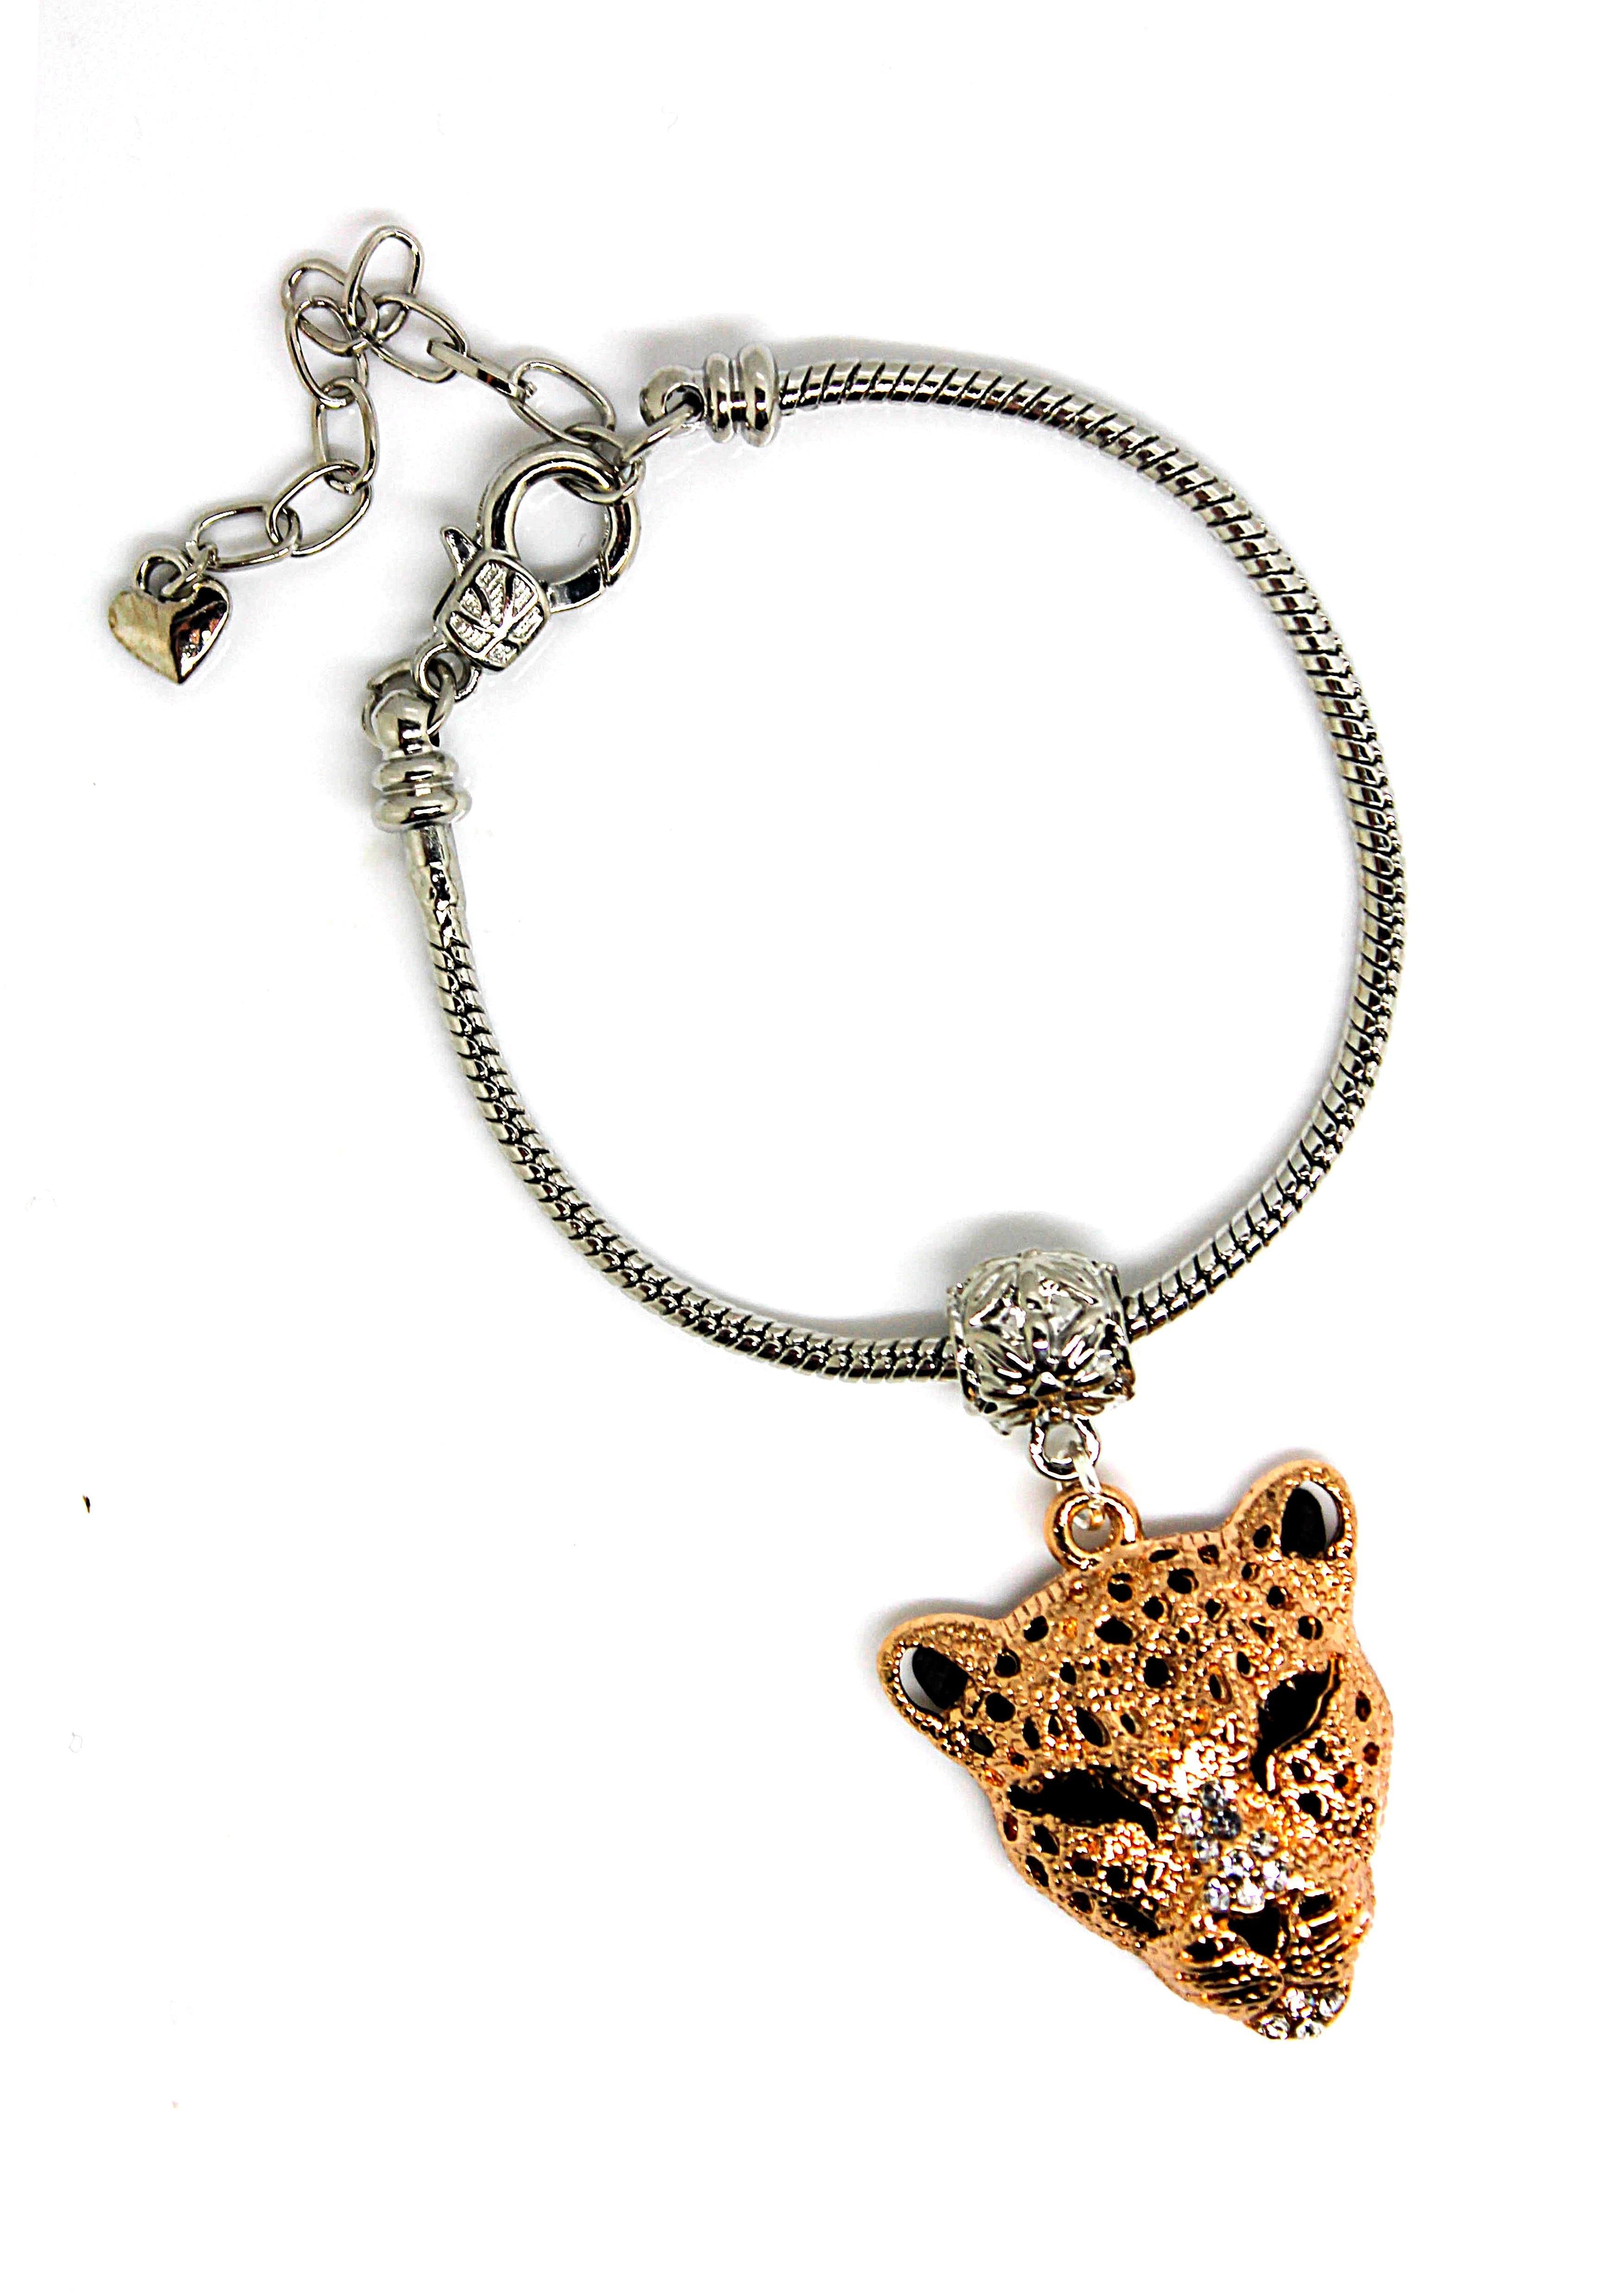 Leopard Charm Bracelet - Wildtouch - Wildtouch